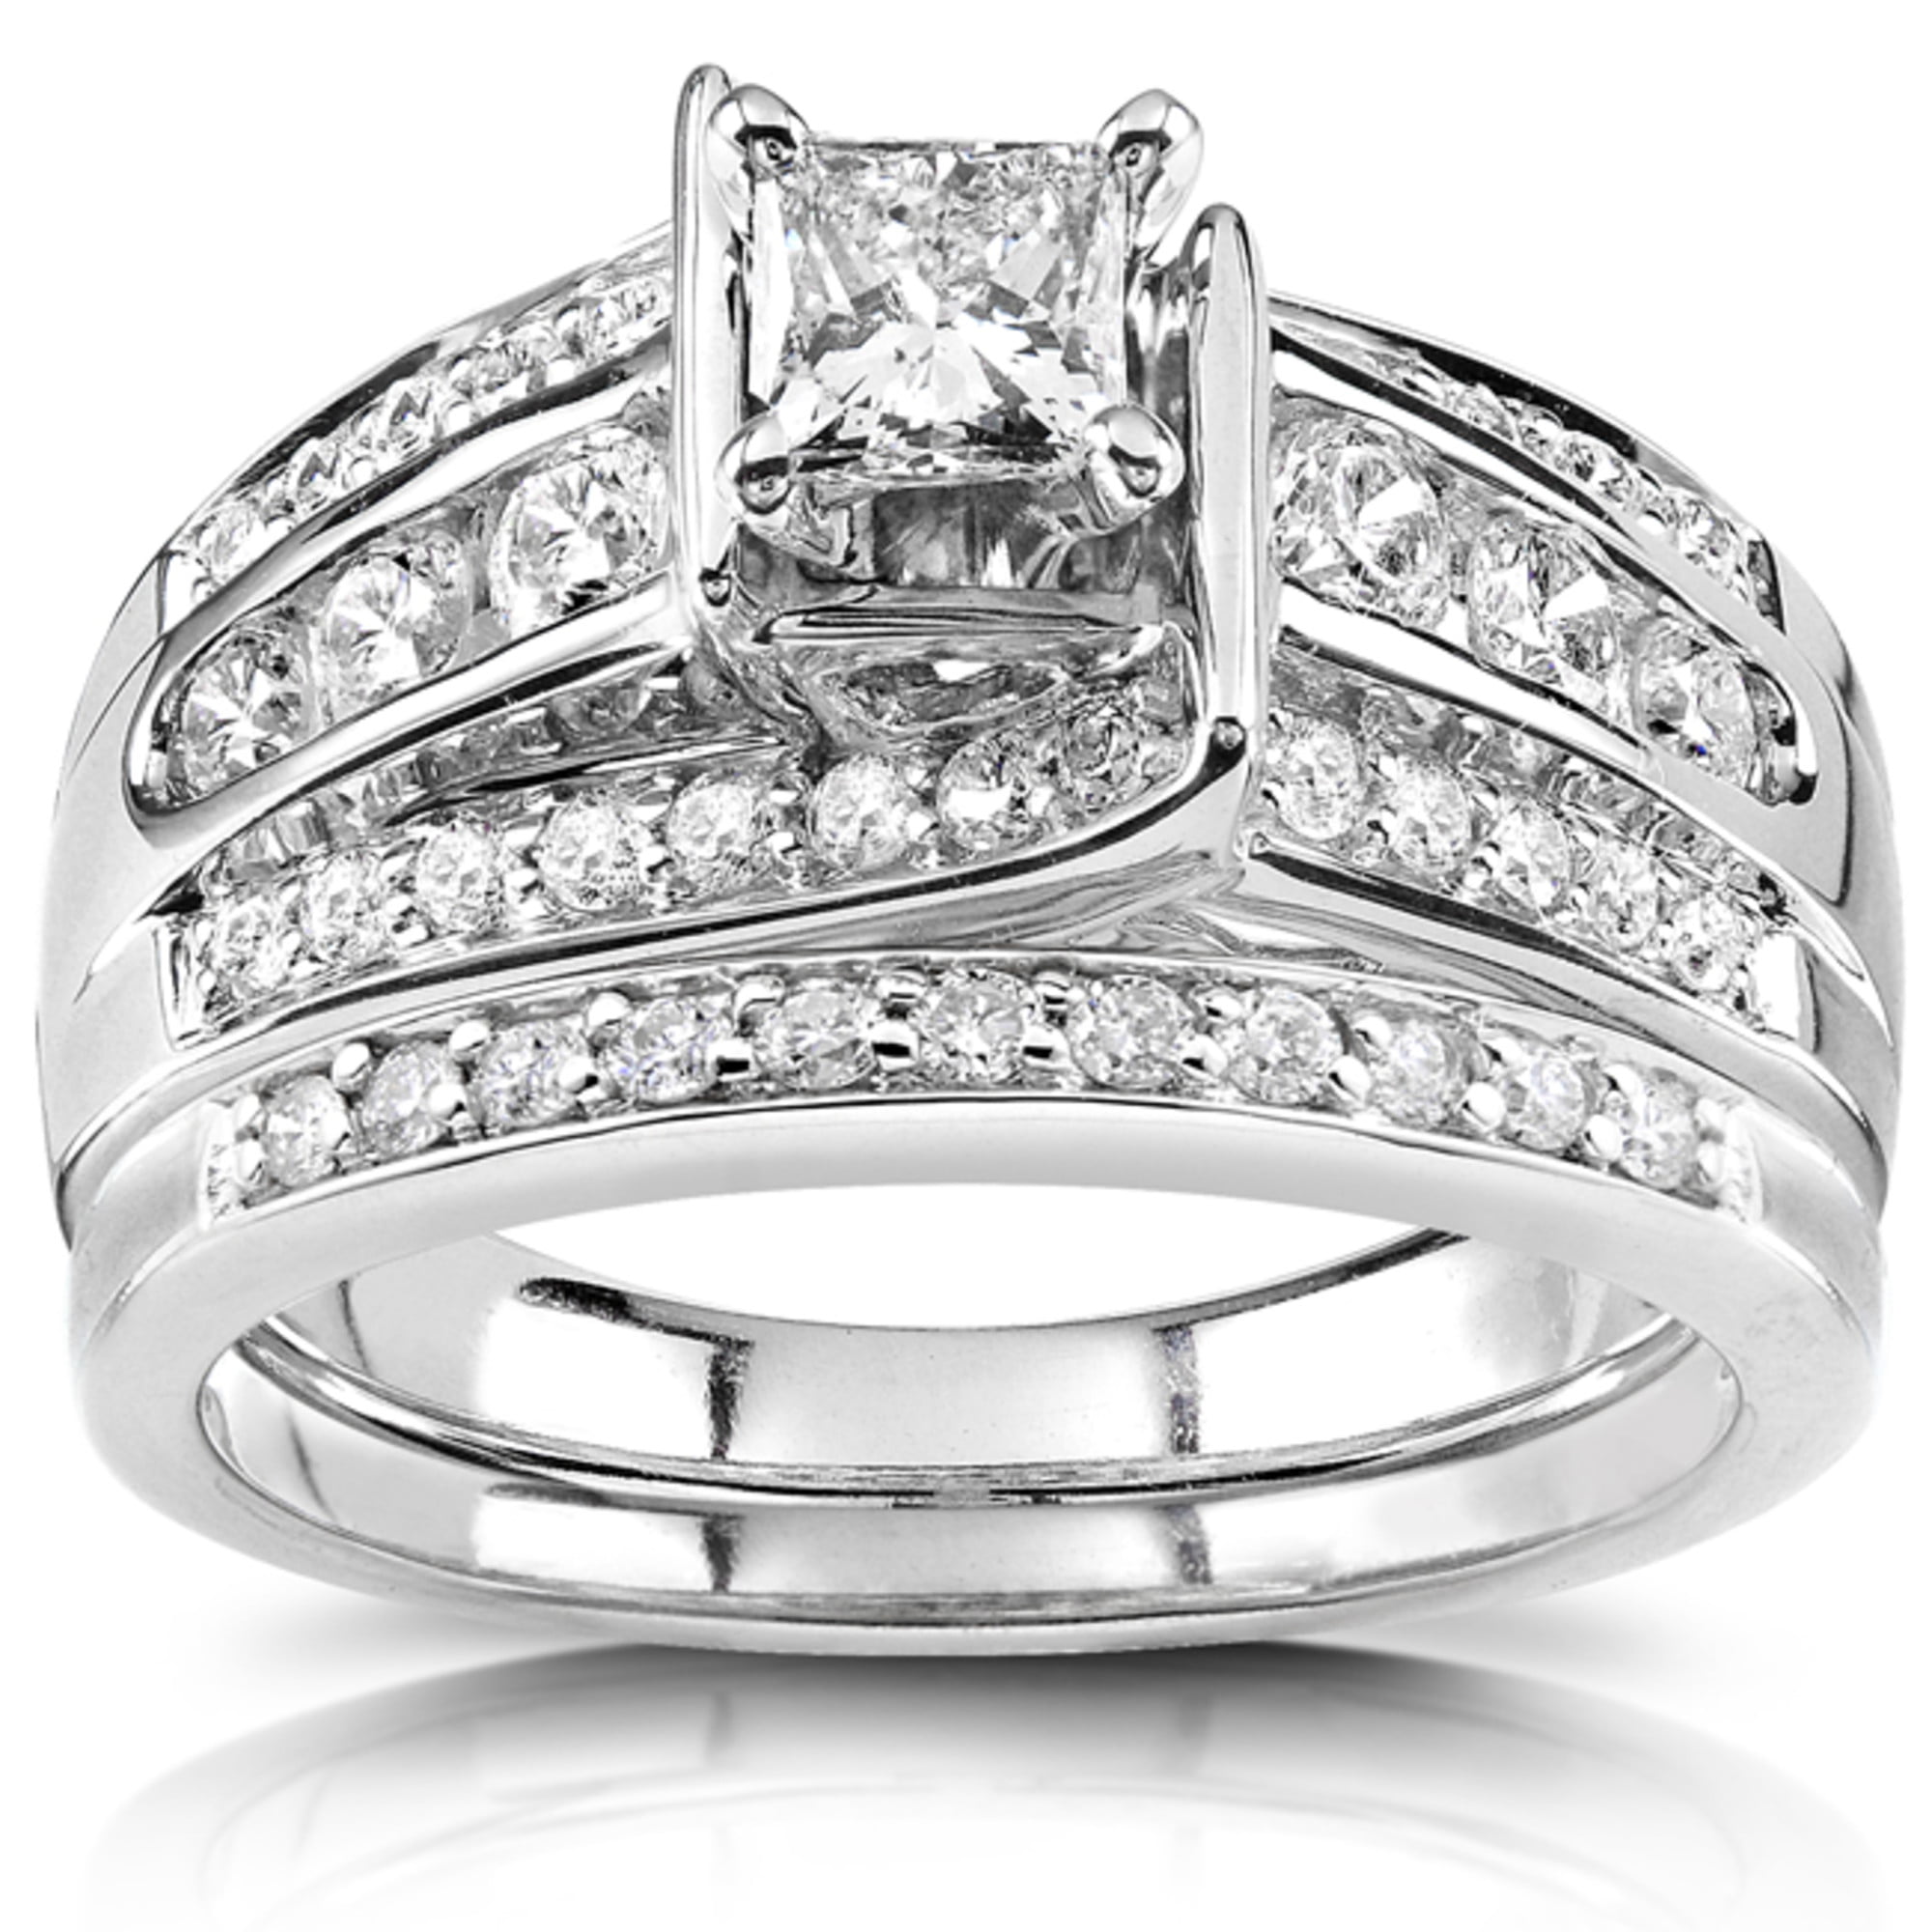 Kobelli Princess Diamond Wedding Ring Set 1 Carat (ctw) in 14K Gold